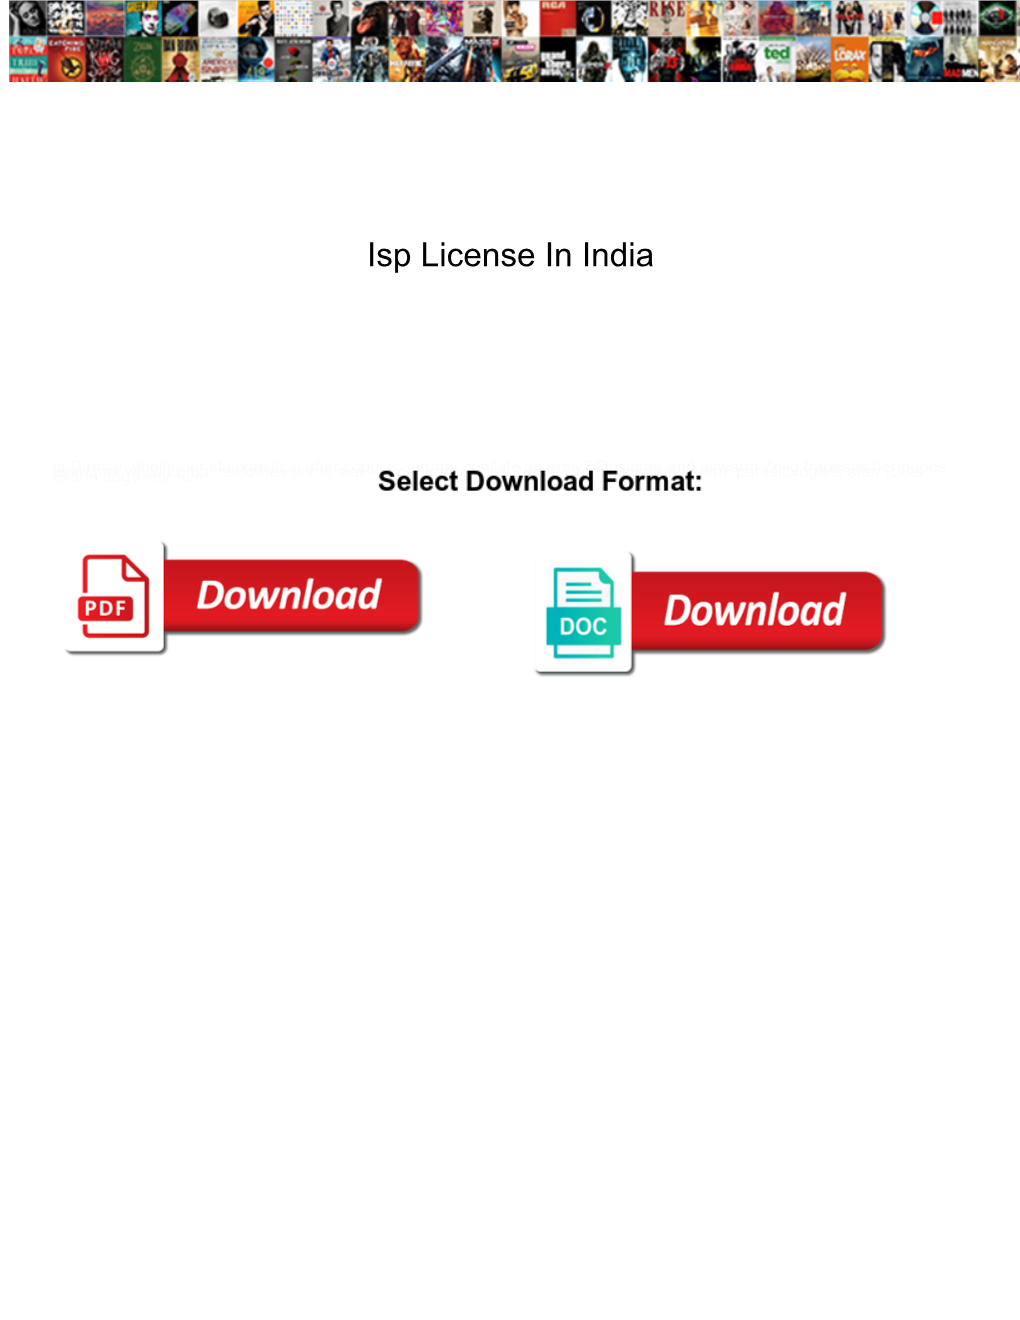 Isp License in India